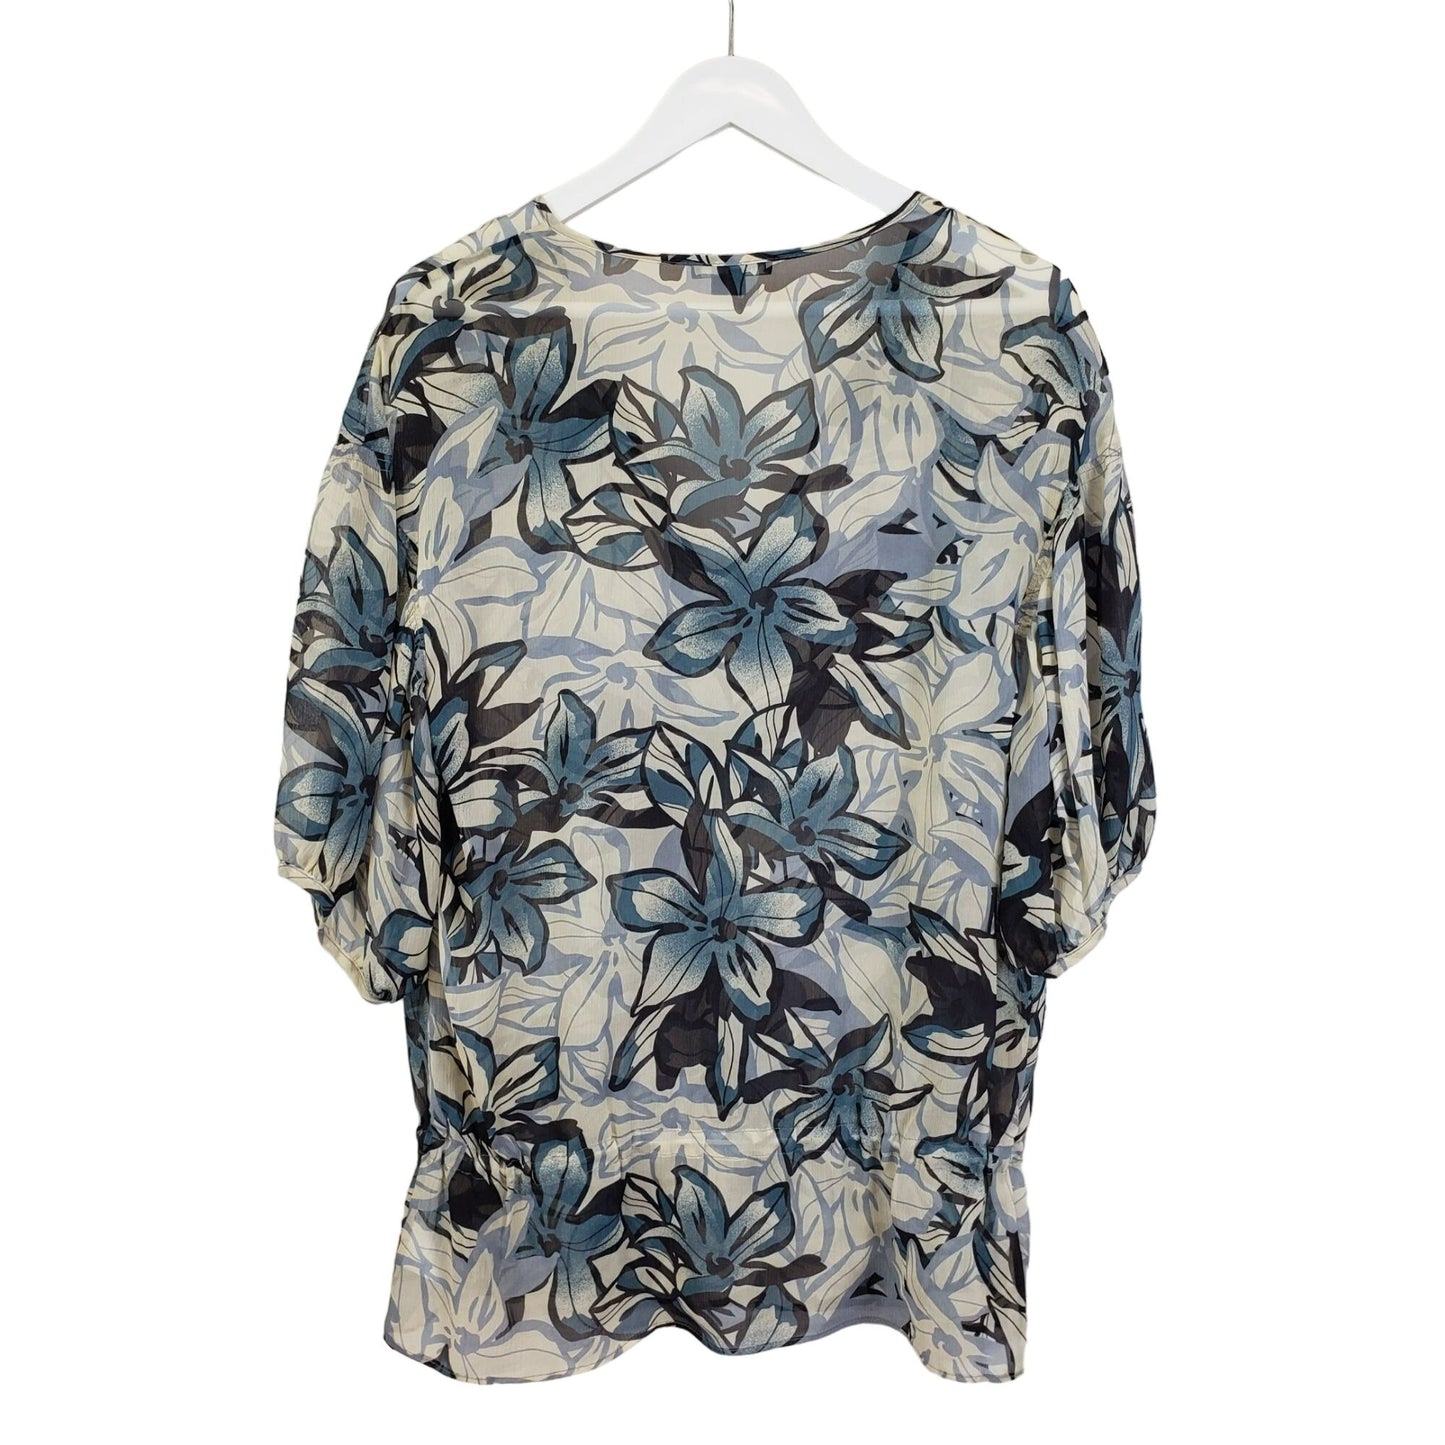 Vince 100% Silk Floral Print Sheer Popover Peplum Blouse Size S/M